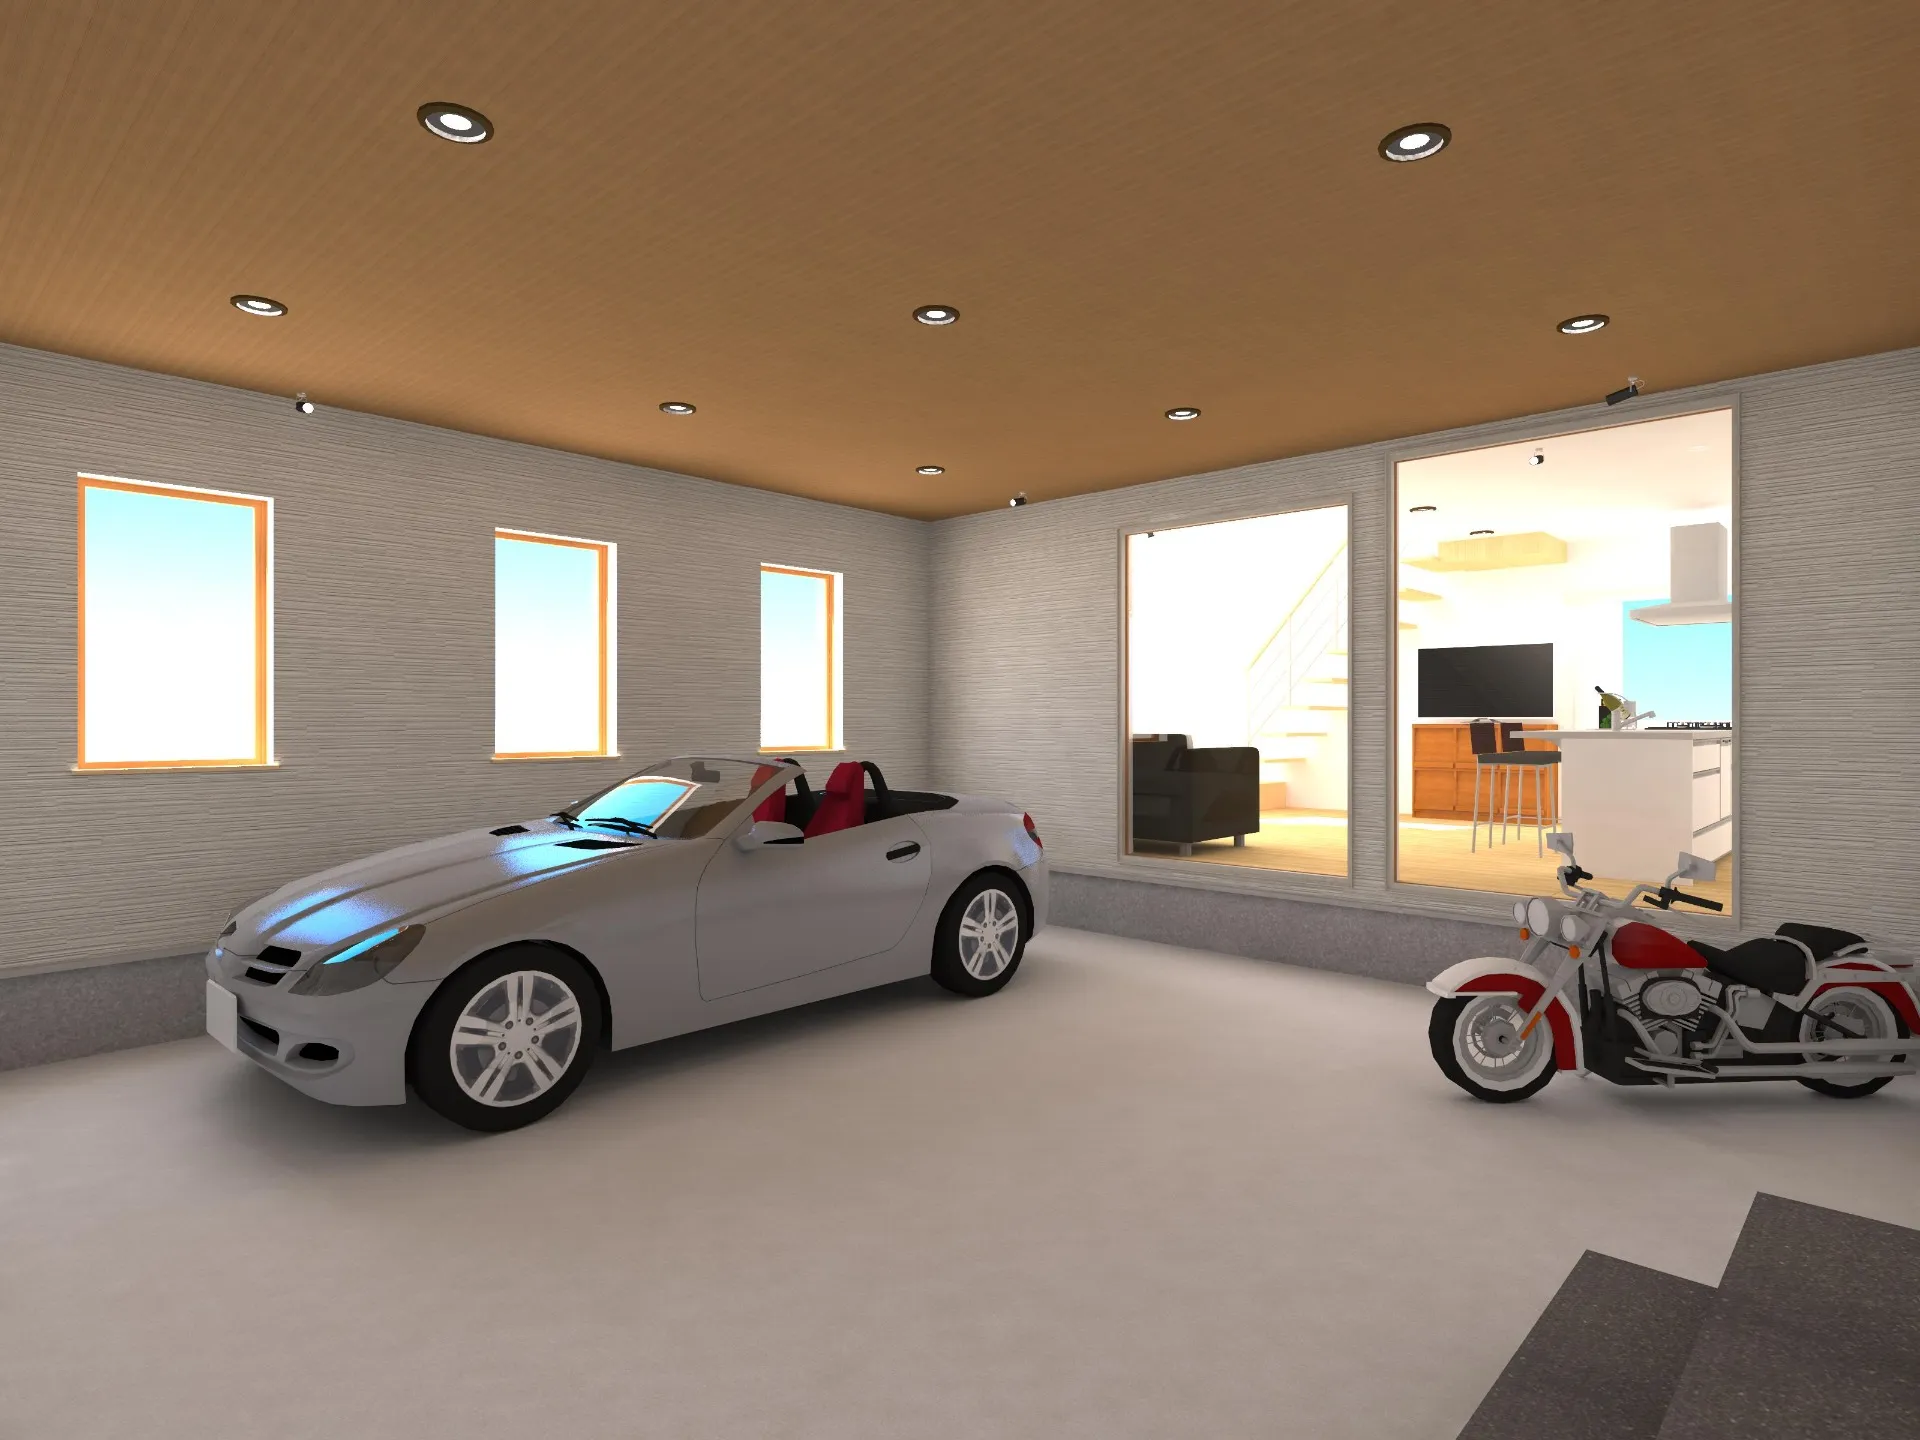 Built-in garage